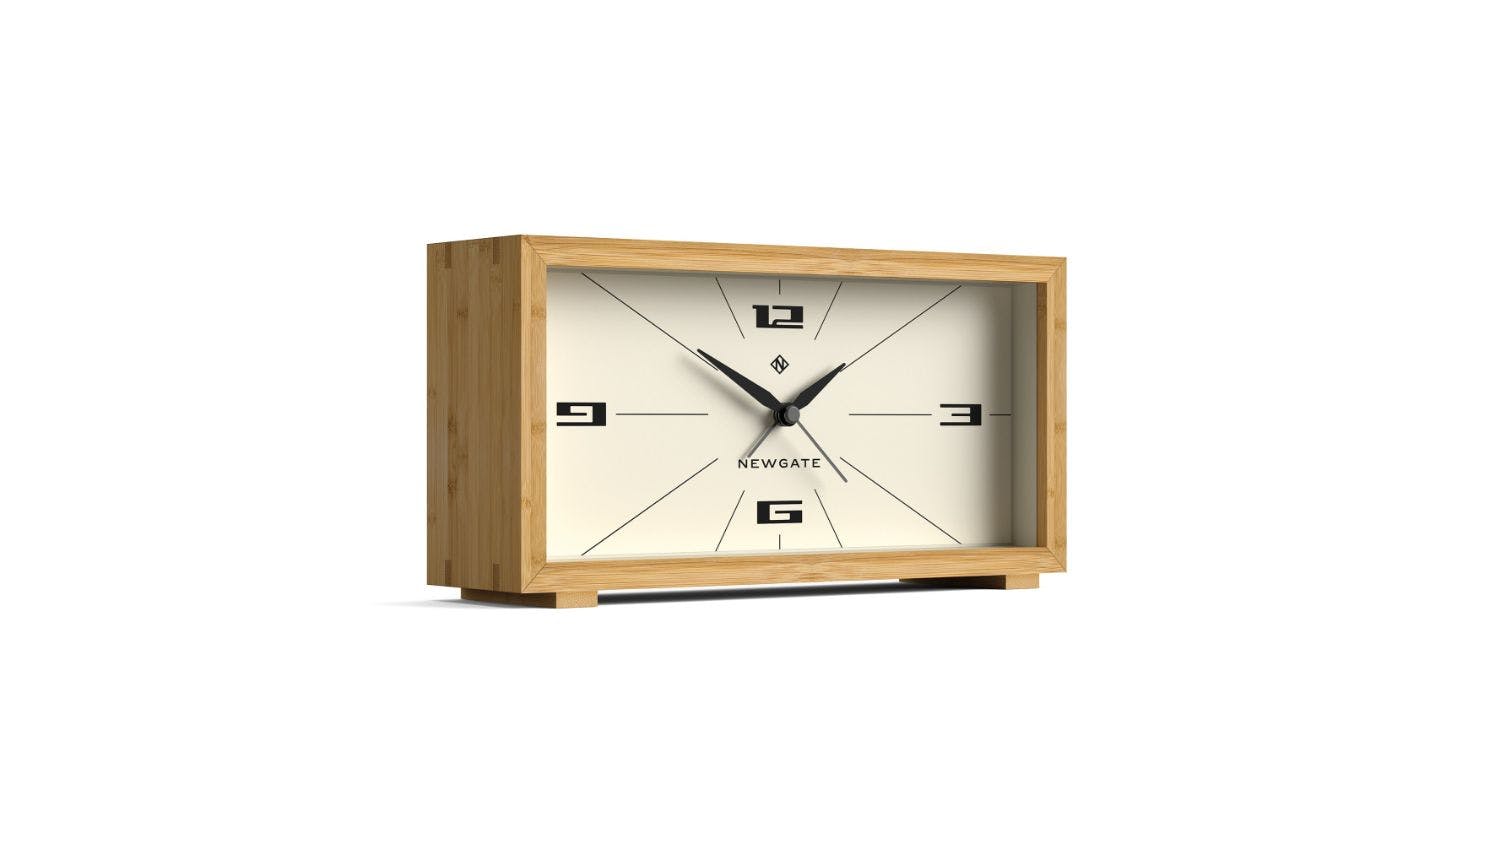 Newgate "Lemur" Alarm Clock - Quarter Dial